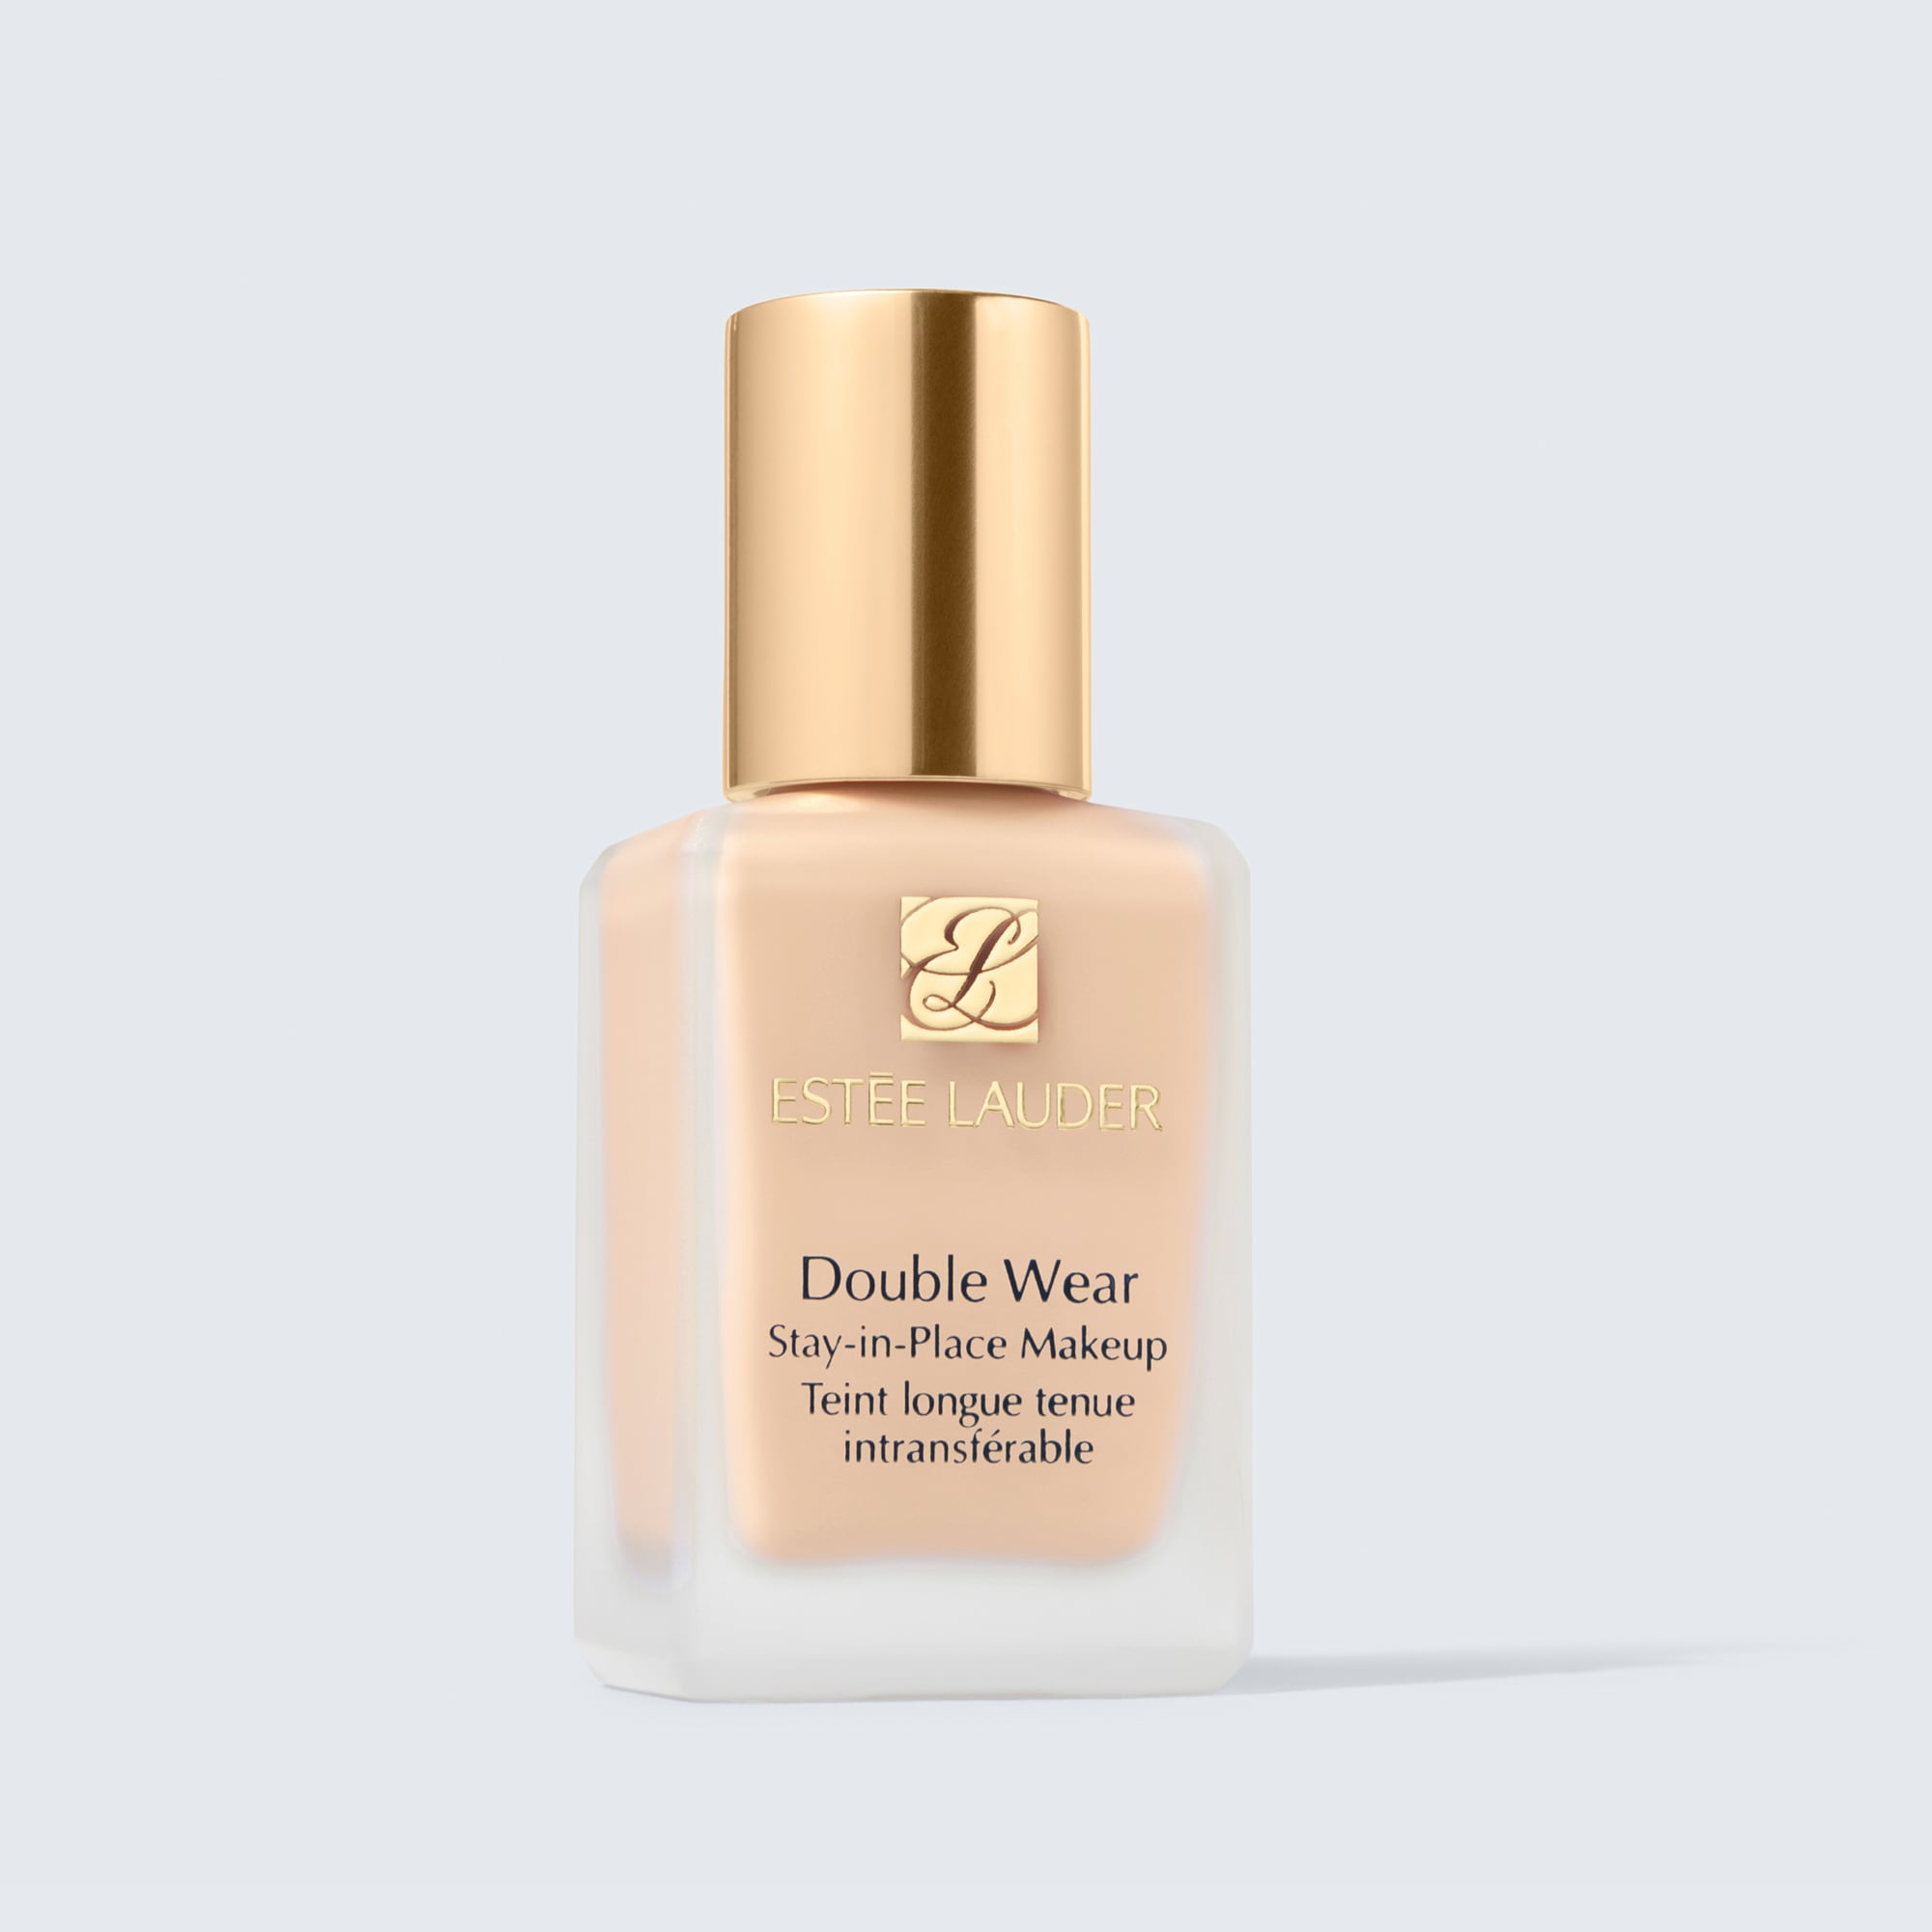 Estee Lauder / Double Wear Stay-in-Place Makeup 6C2 Pecan 1.0 oz